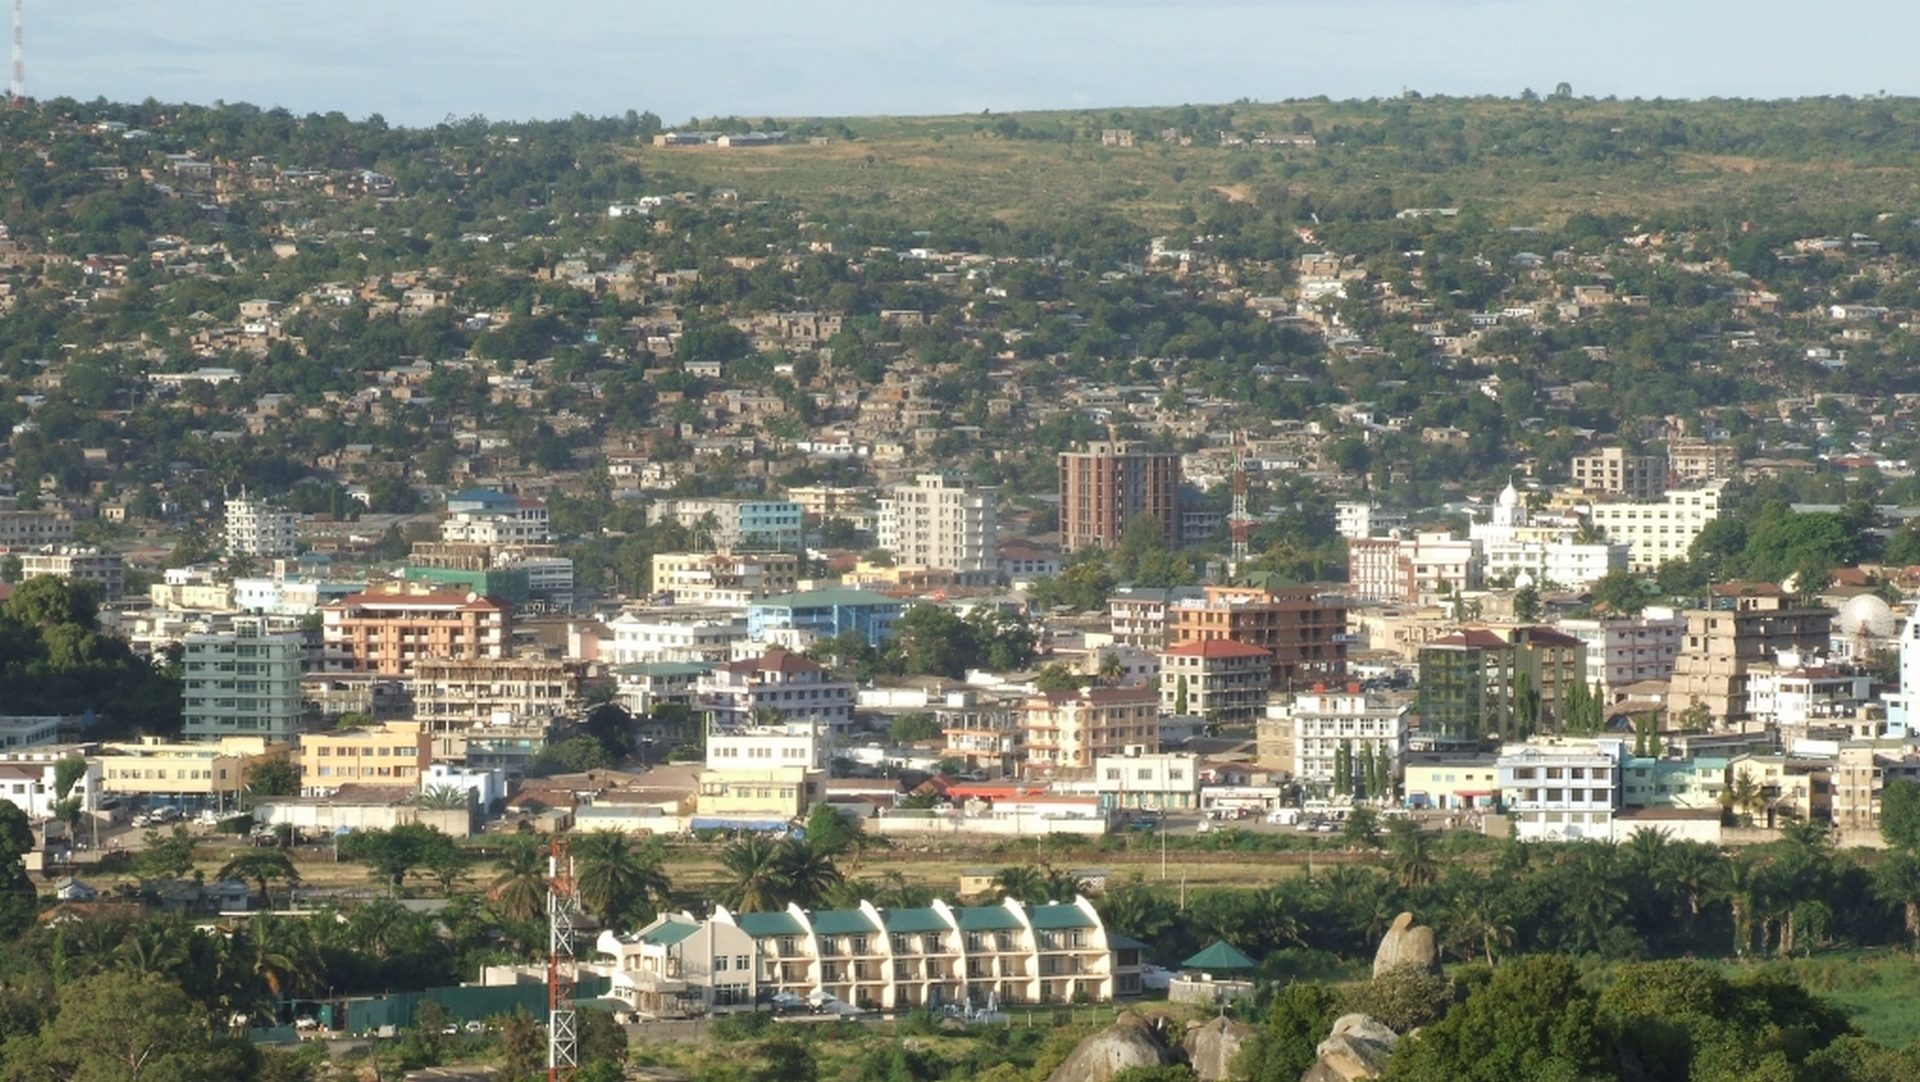 La ville de Mwanza, au nord de la Tanzanie (photo flickr Jonathan Stonehouse CC BY 2.0)